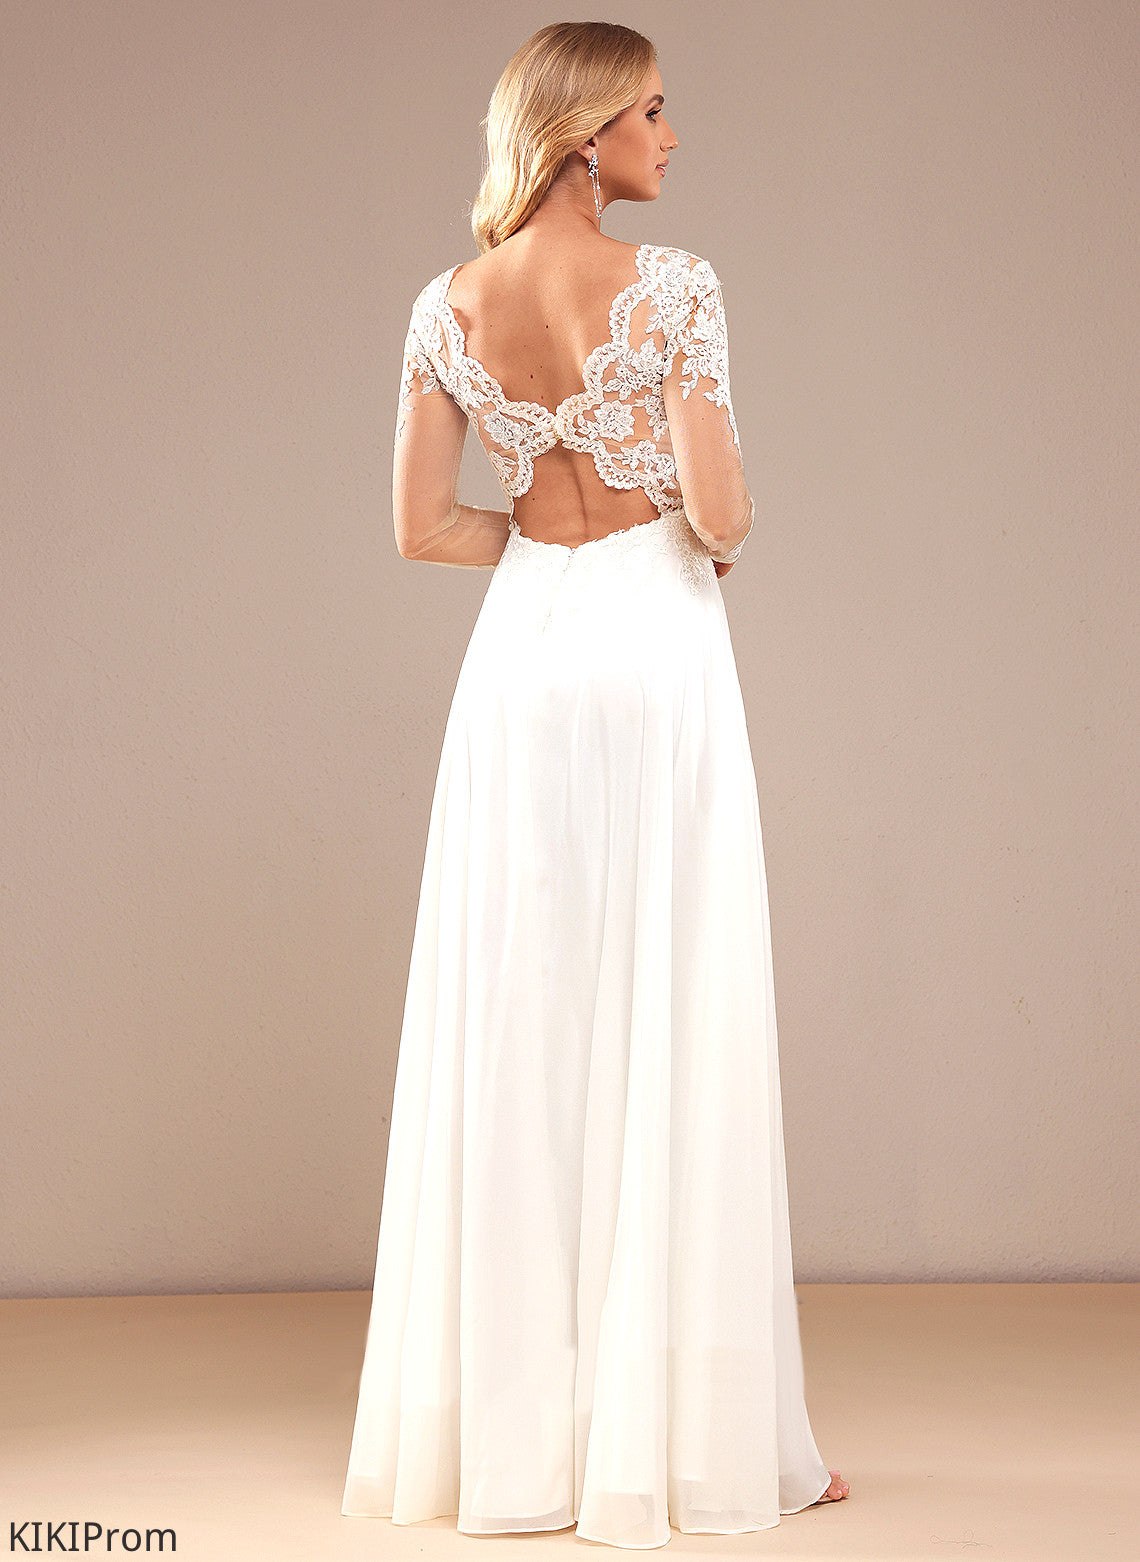 Dress With Sequins Wedding Floor-Length V-neck Wedding Dresses Lace Chiffon Marianna A-Line